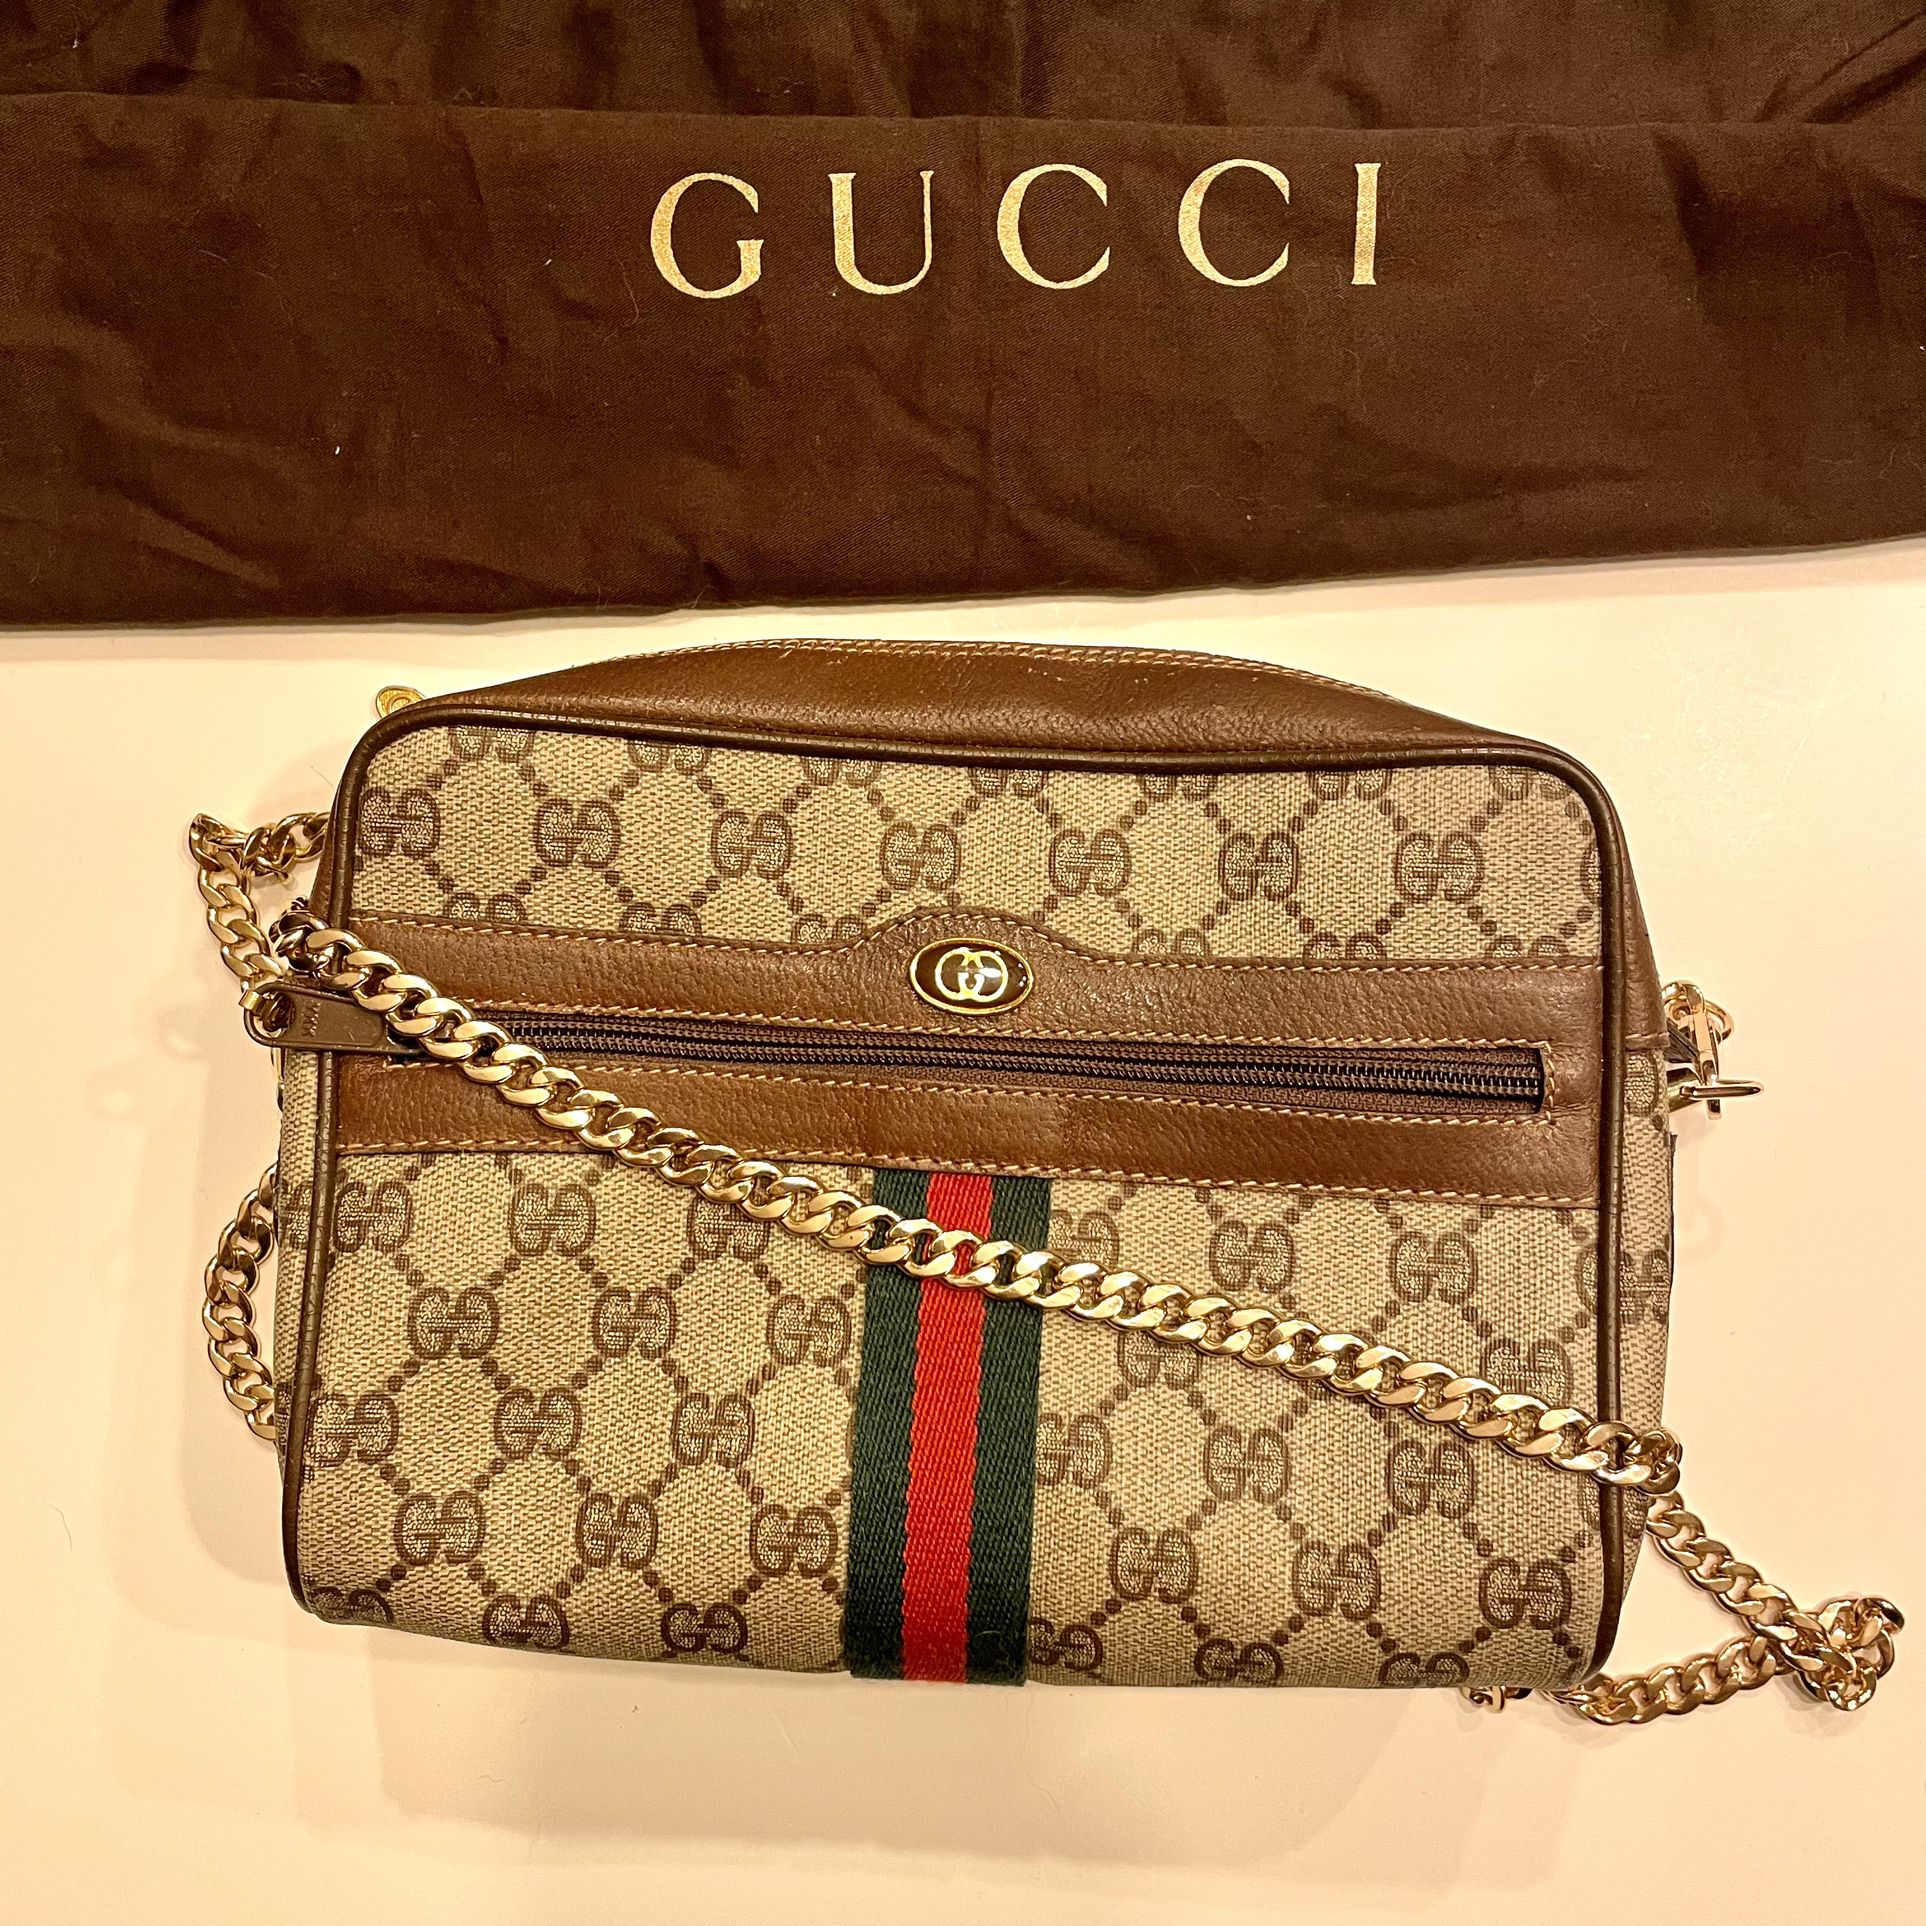 Gucci Ophidia Gg Small Handbag 1 for Sale in Bonita Springs, FL - OfferUp